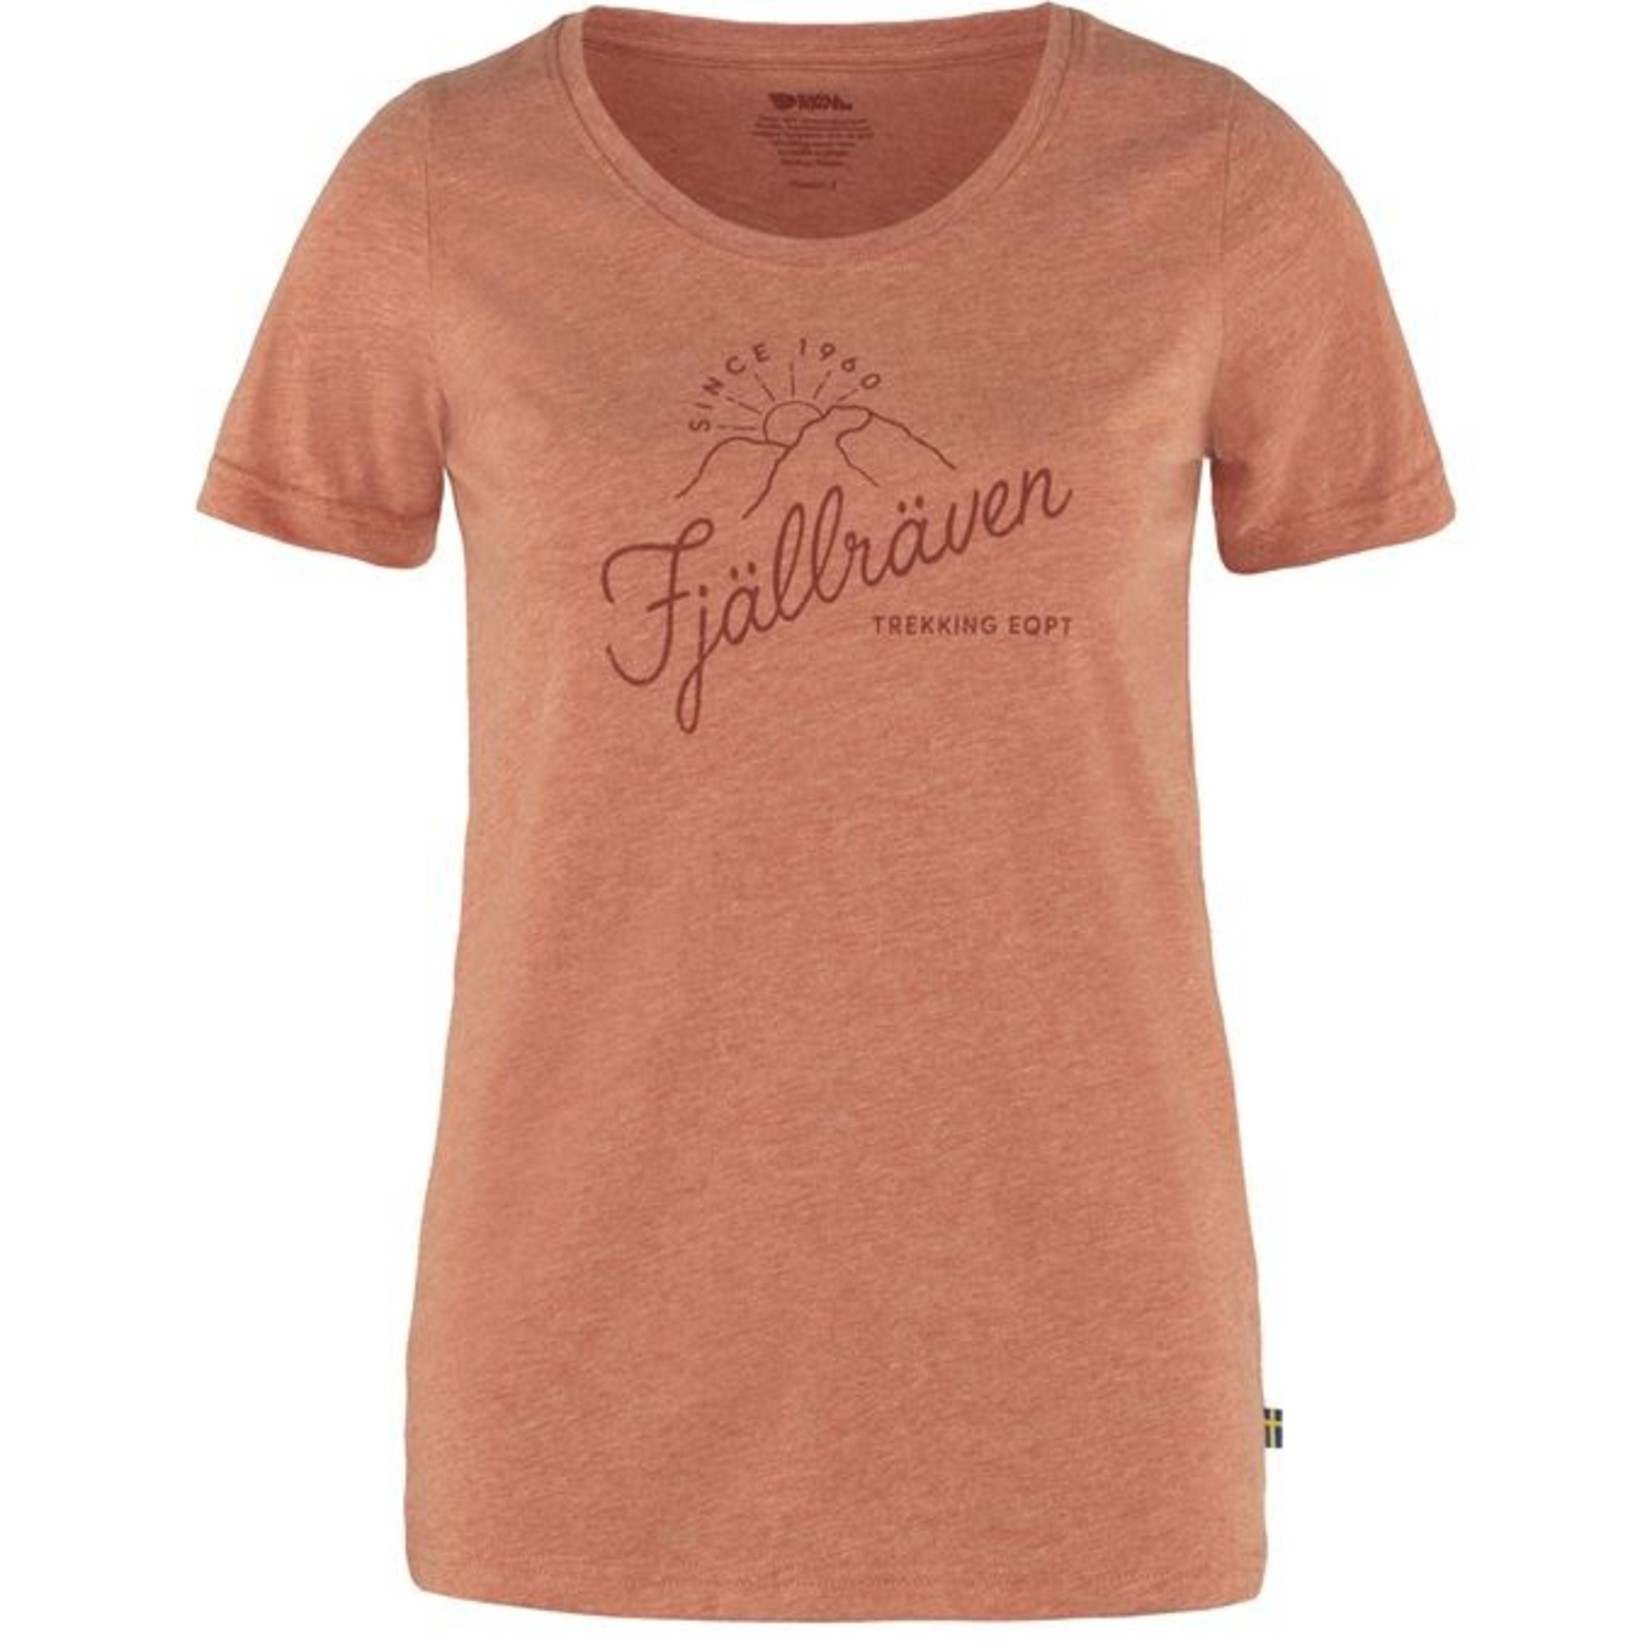 Fjallraven Fjallraven Women's Sunrise T-shirt